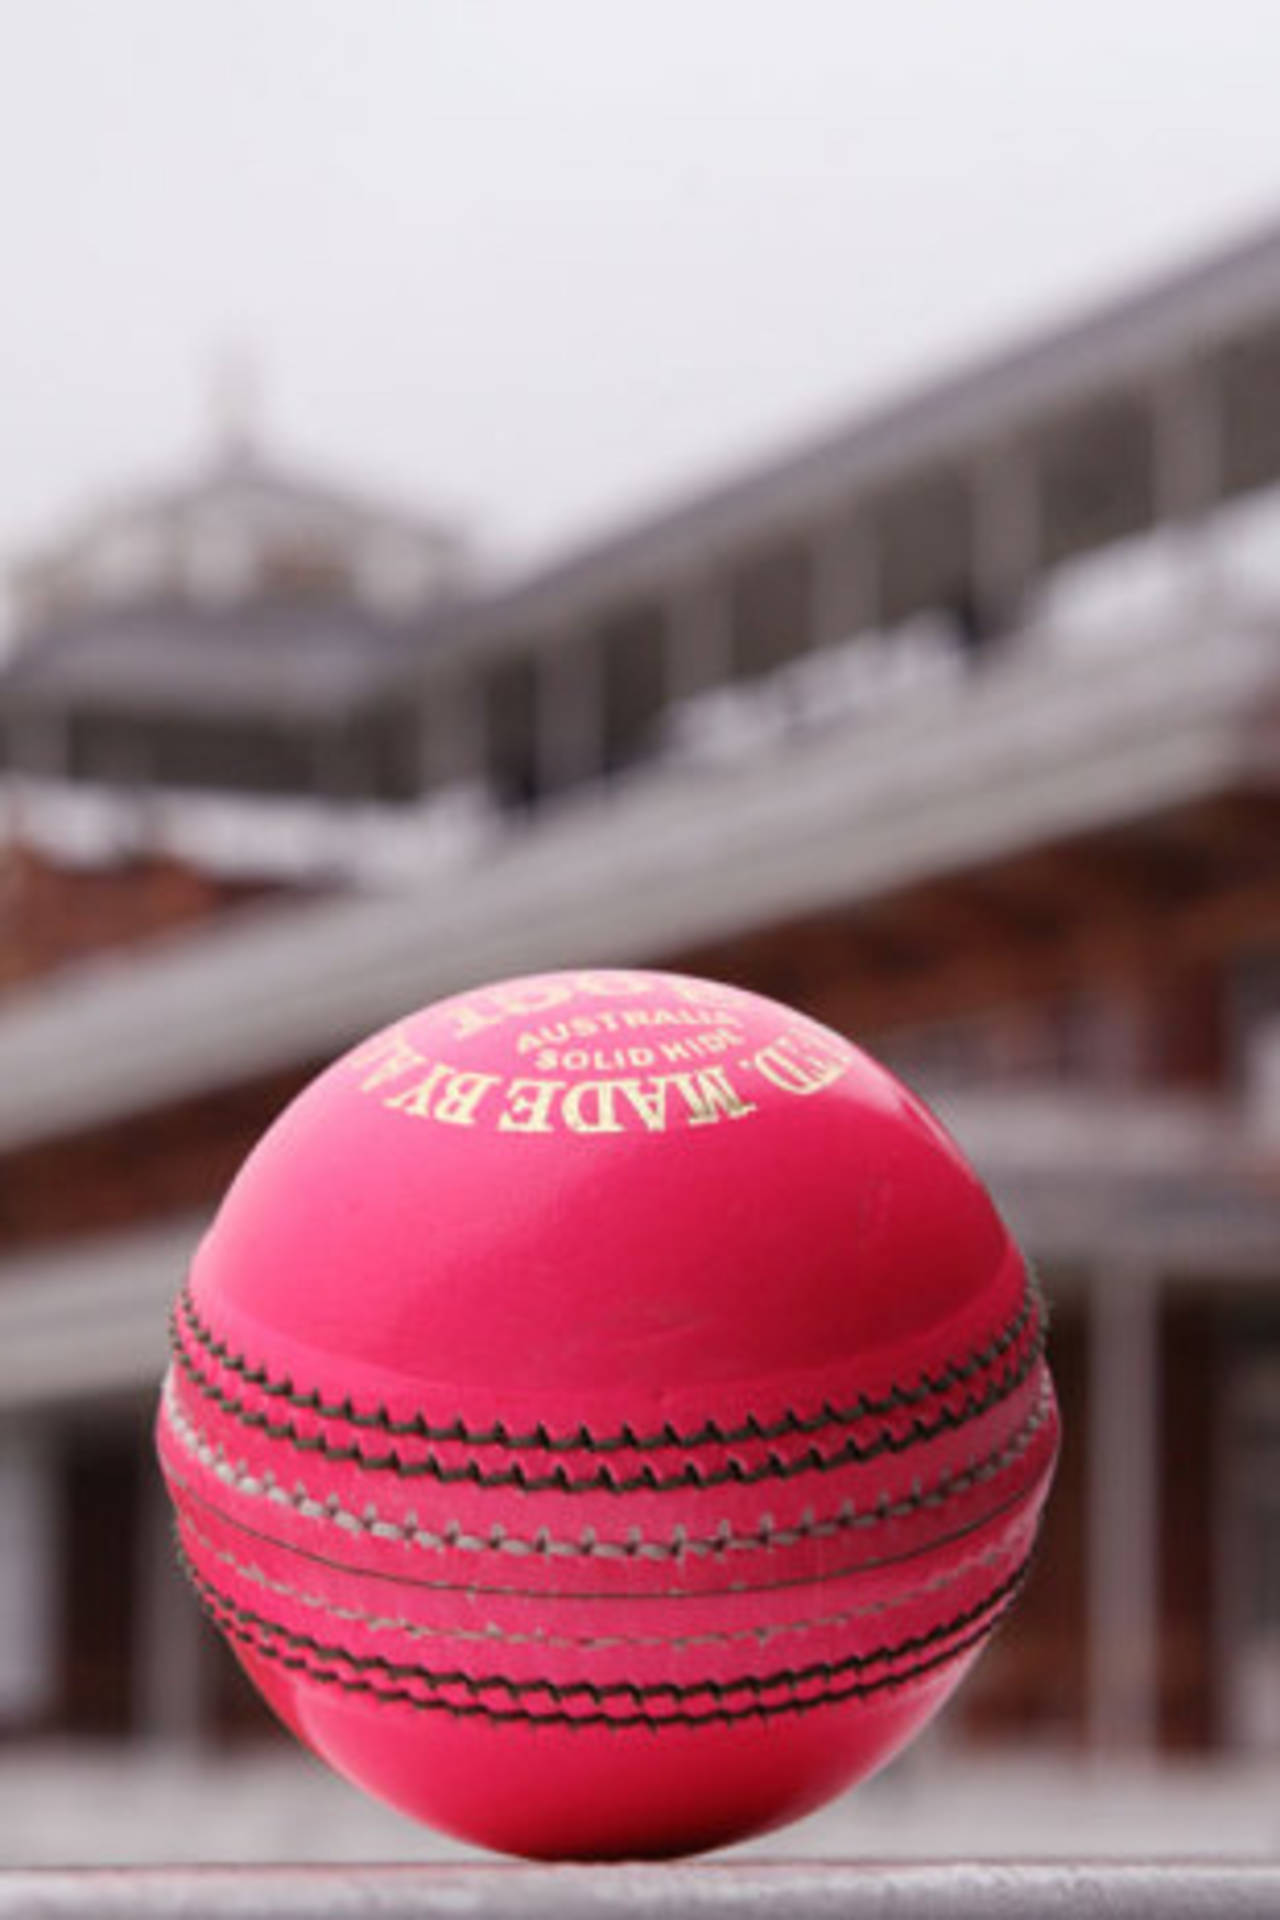 The Bangladesh Cricket League 2012-13 final will be played with a pink ball under lights&nbsp;&nbsp;&bull;&nbsp;&nbsp;Clare Skinner